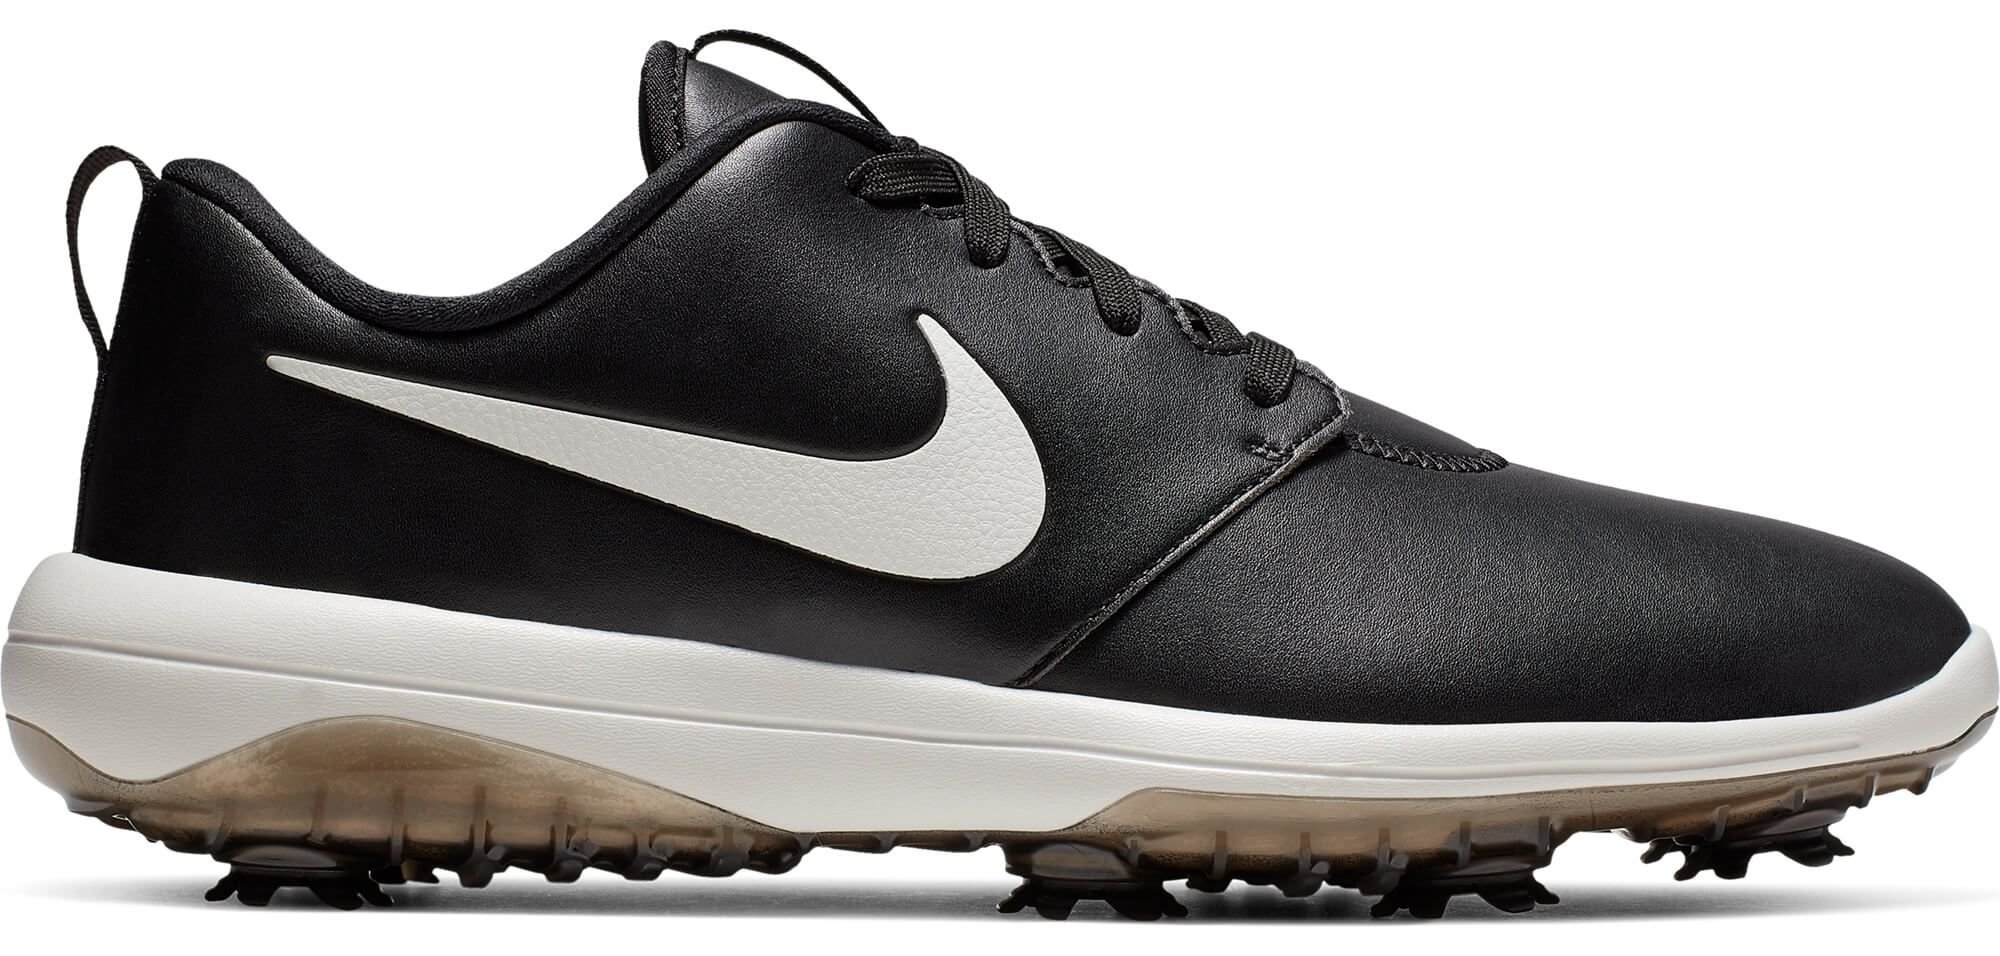 Nike Roshe G Tour Golf Shoes 2019 Black/White Contrast - Carl's